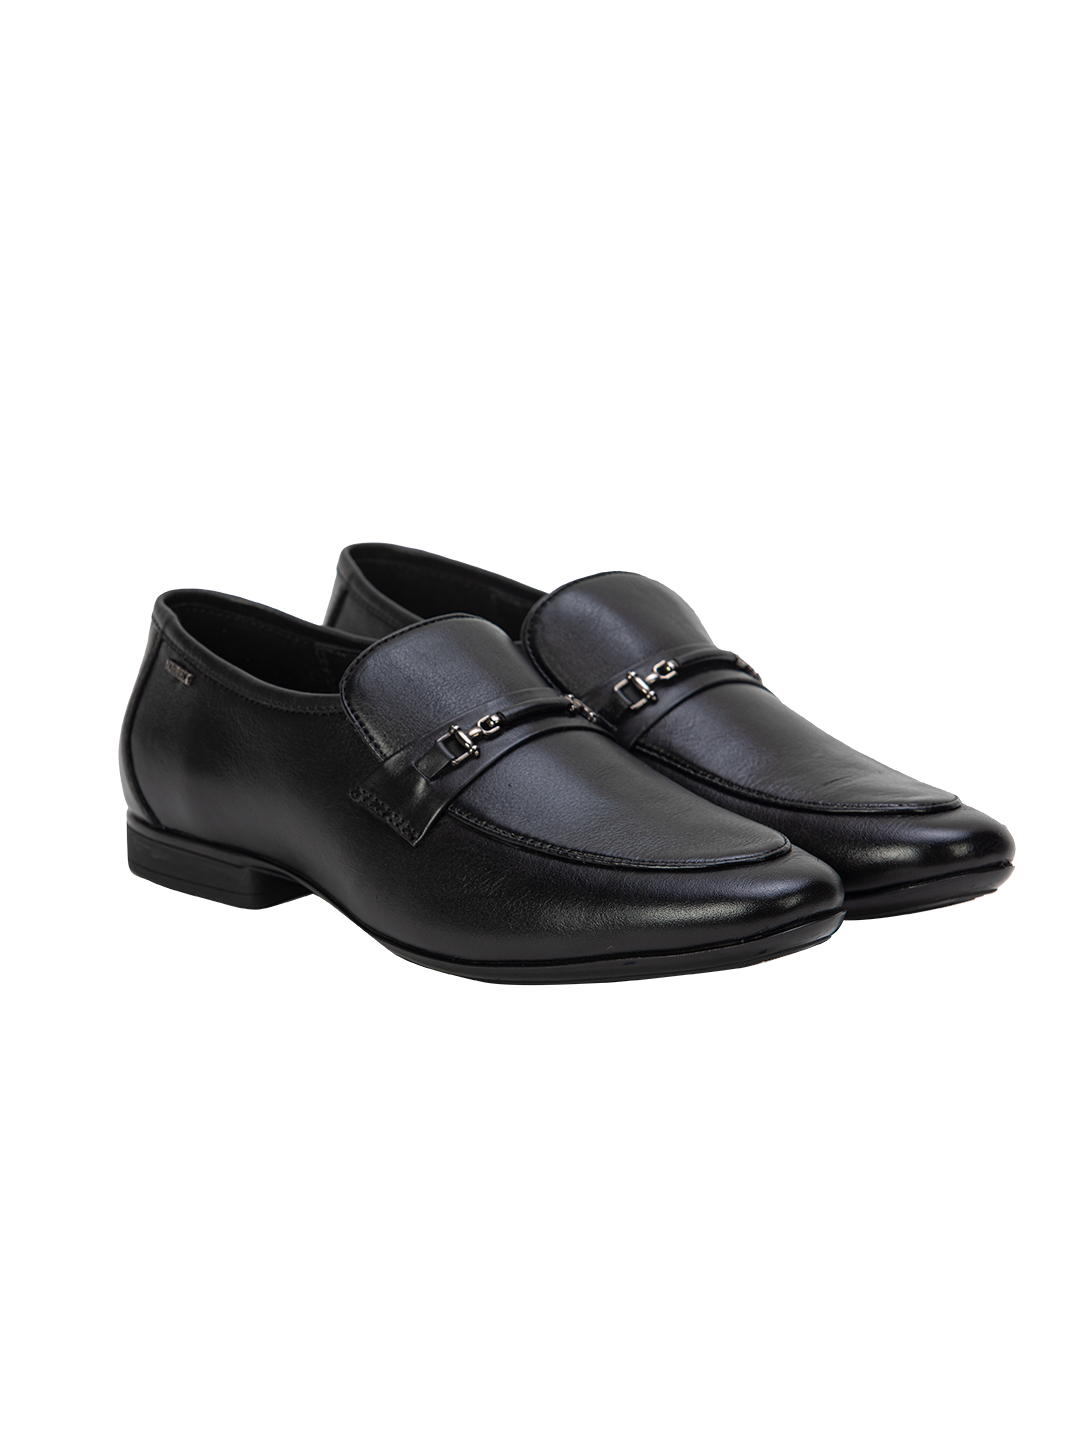 Buy Von Wellx Germany Comfort Black Glib Shoes Online in Doha